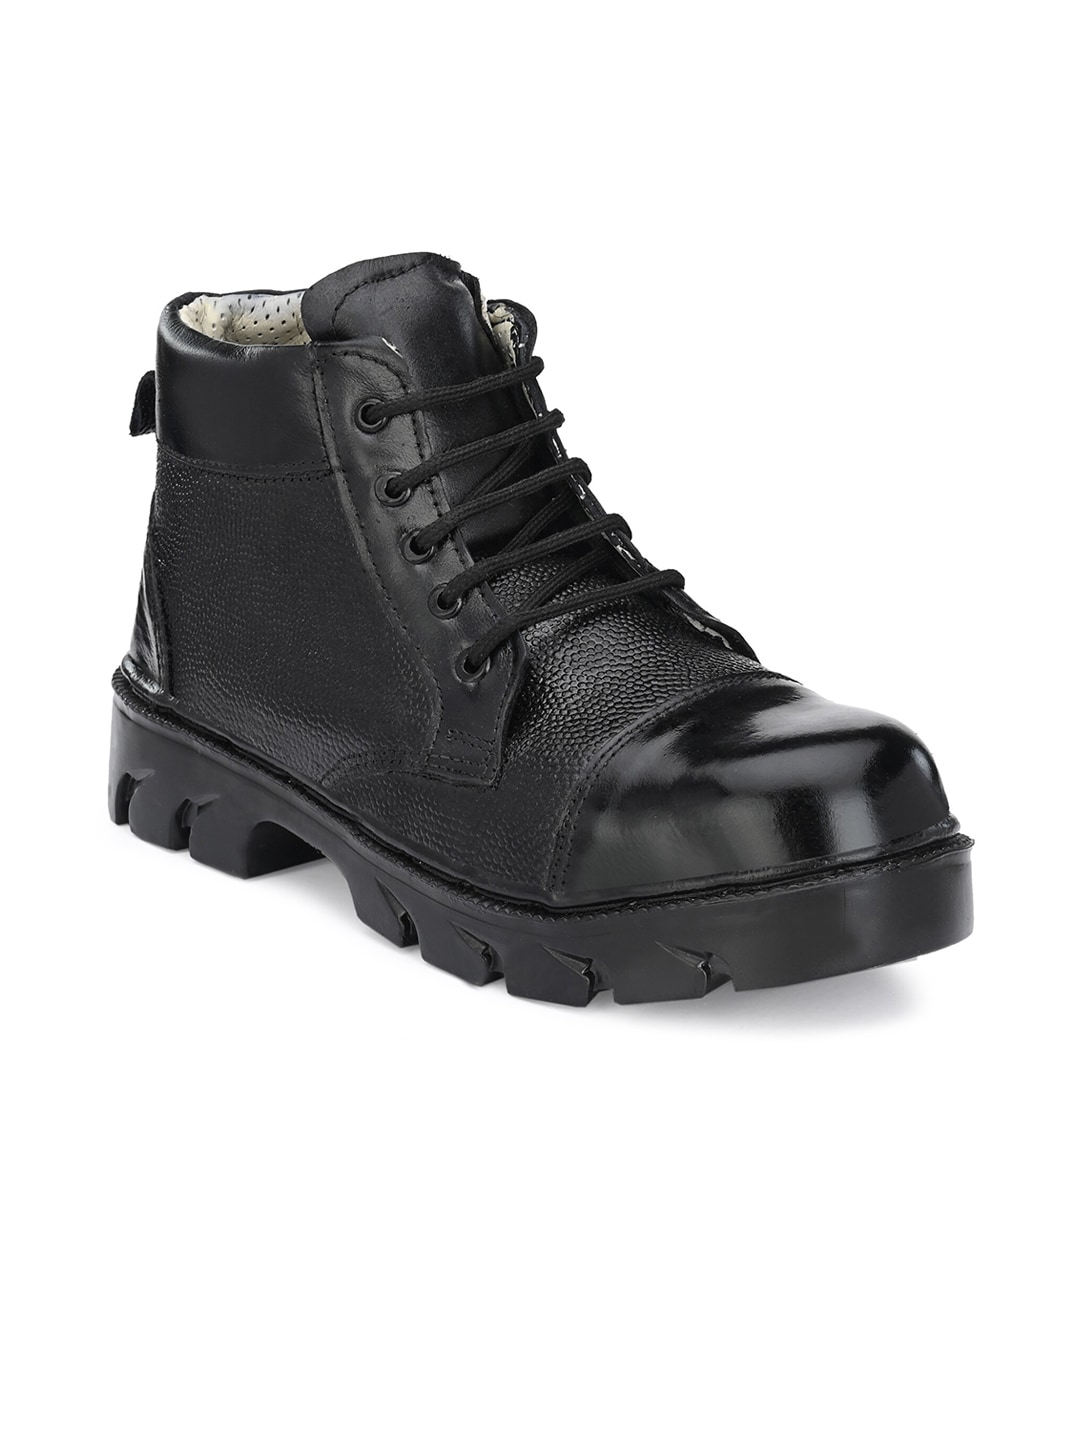 Eego Italy Black Leather Combat Steel Toe Boots